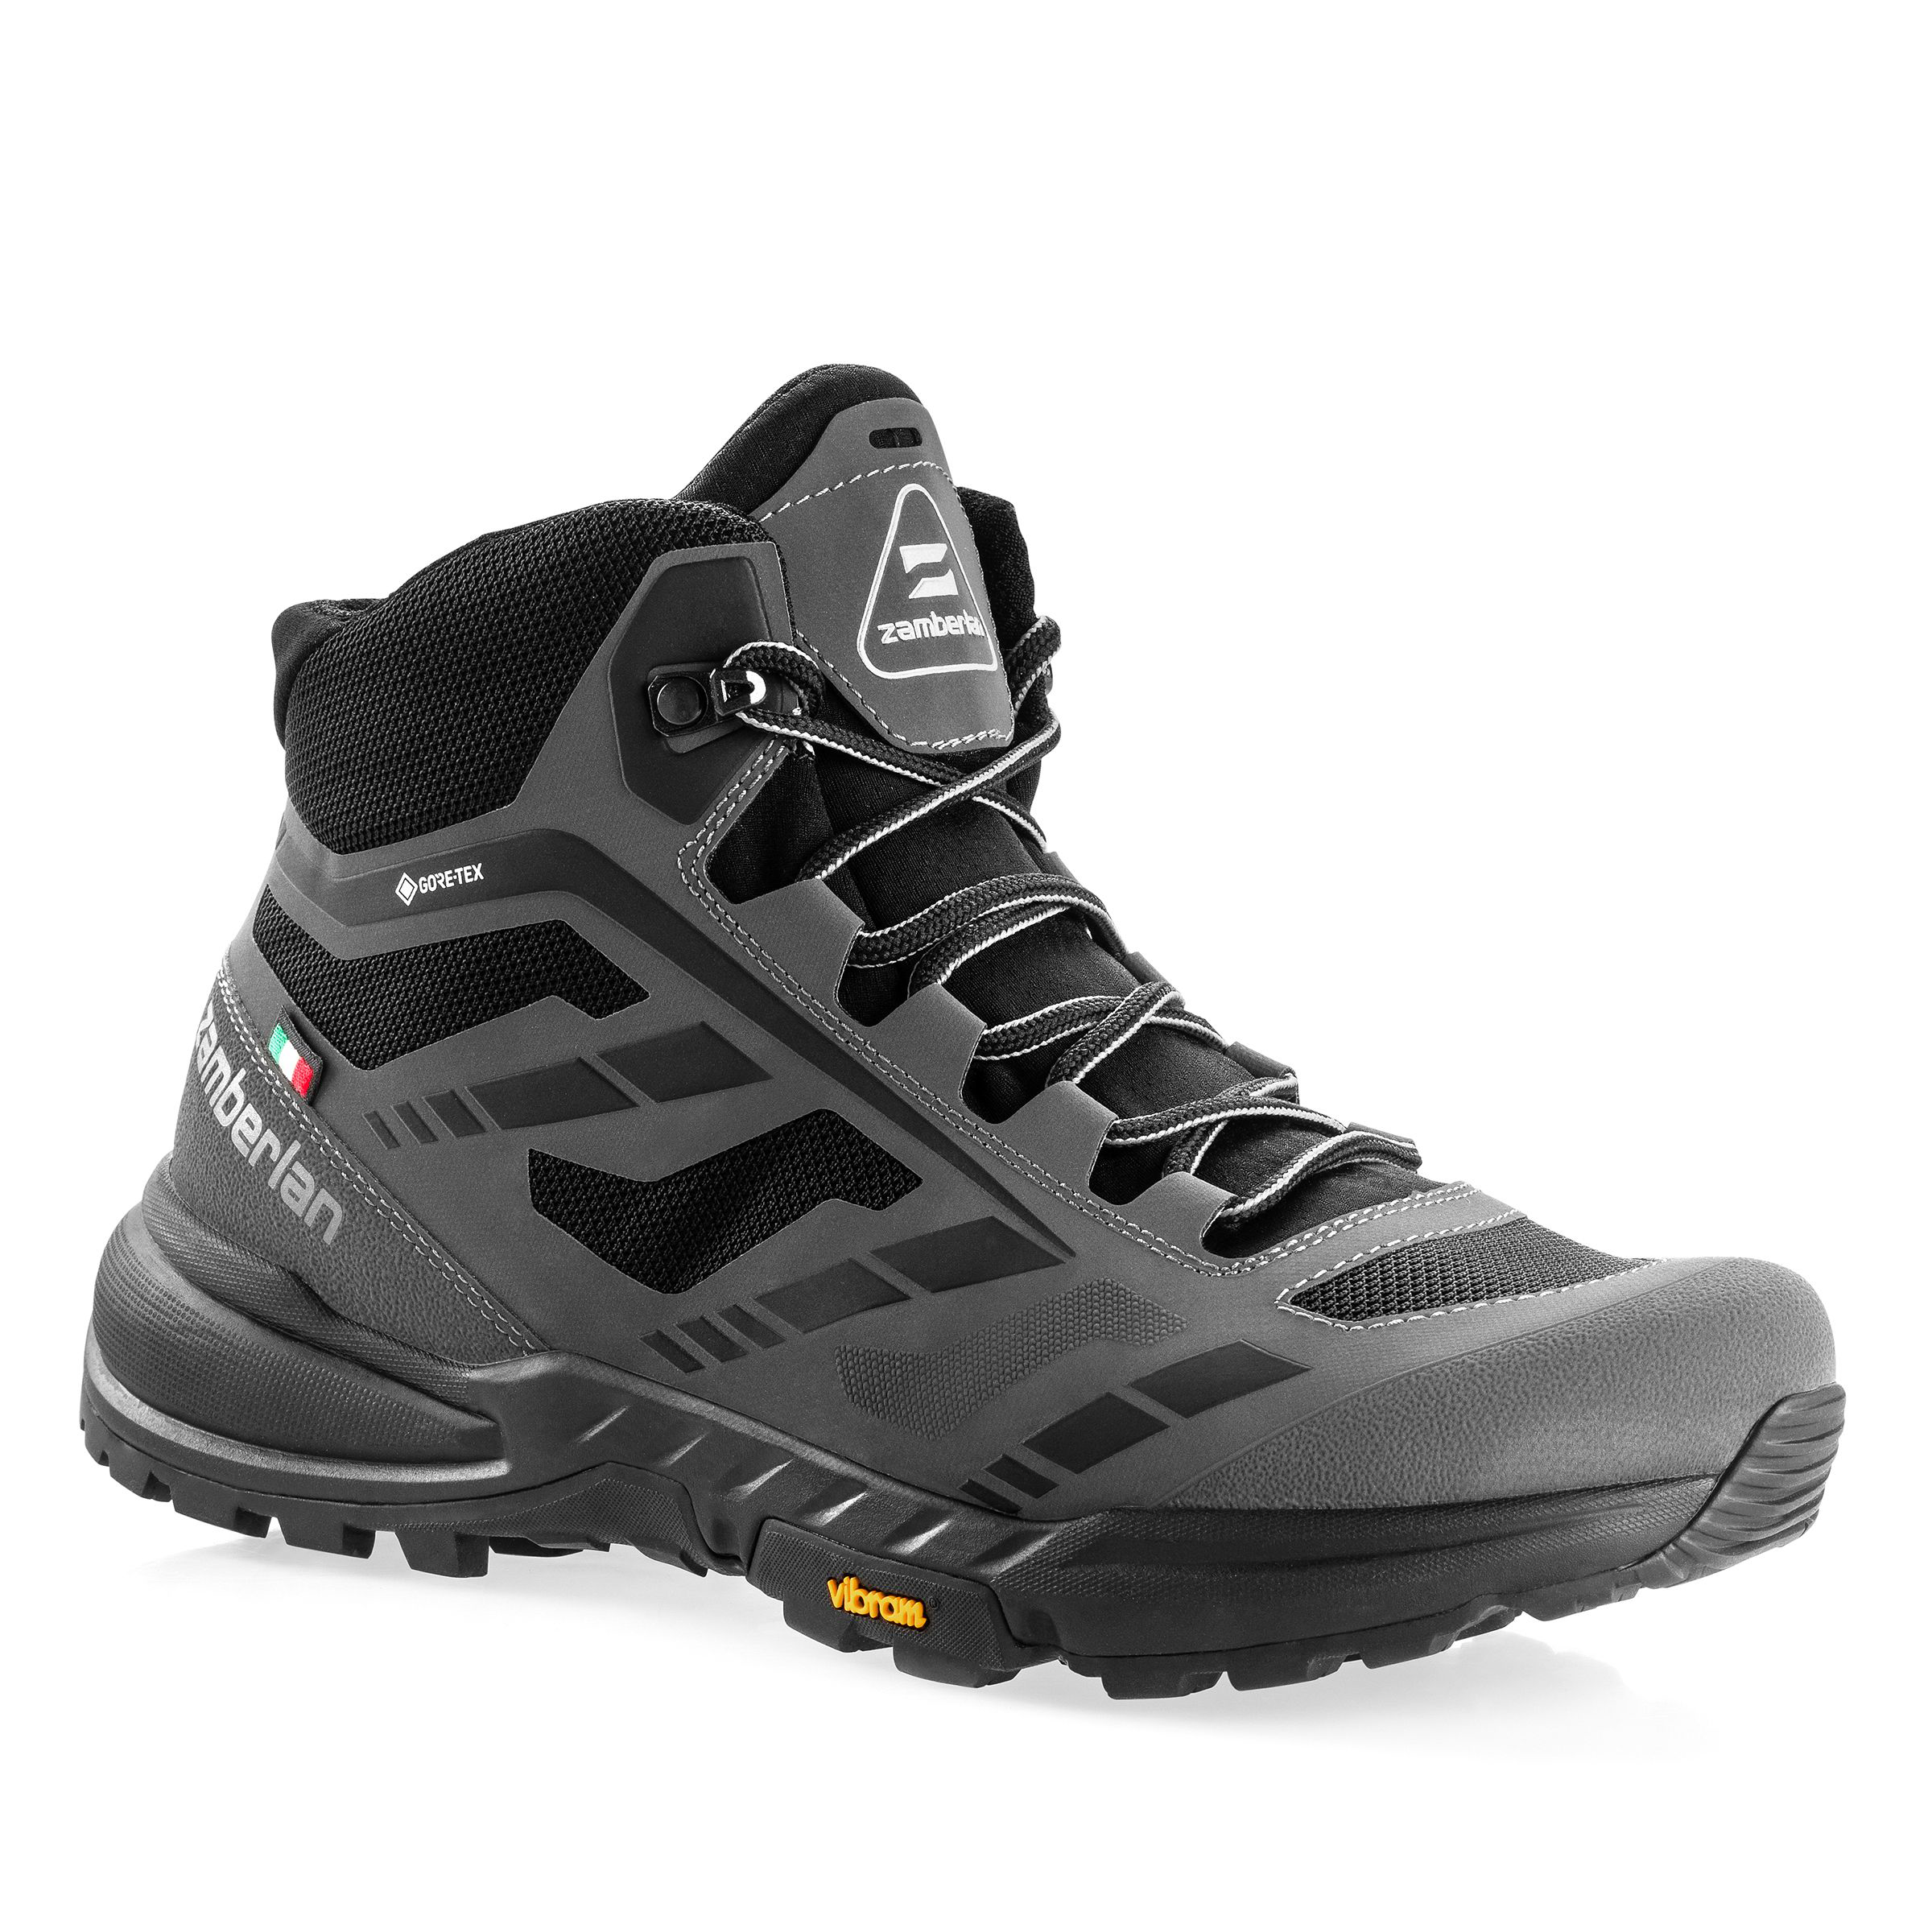 Zamberlan 219 Anabasis GTX Waterproof Mid Hiking Boots for Men - Grey - 13M